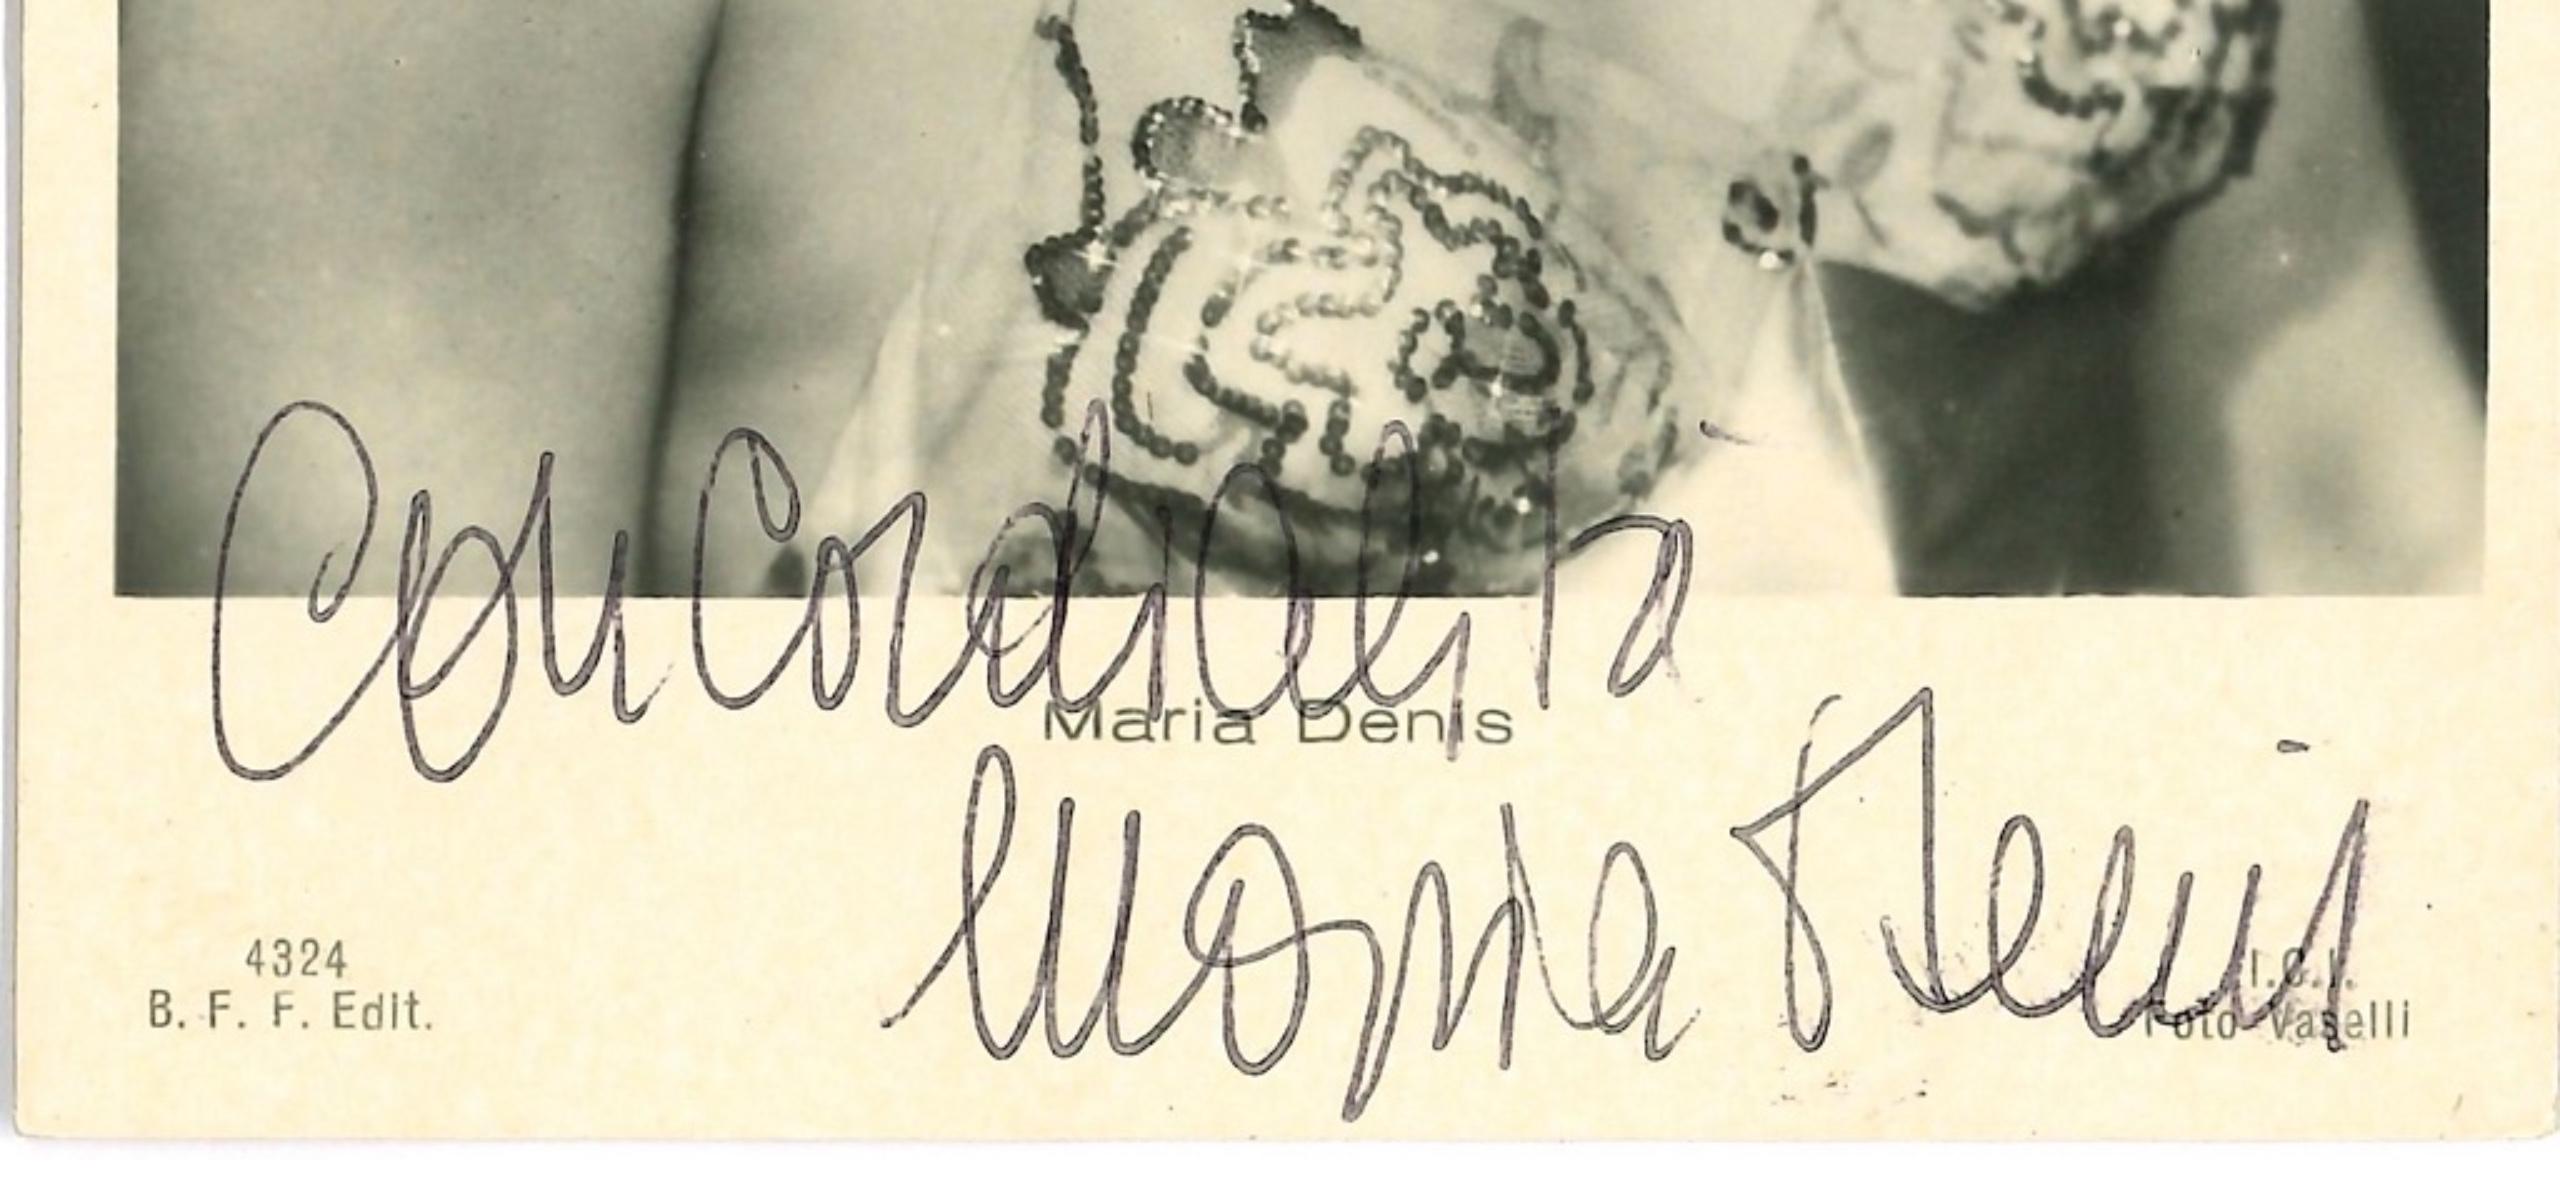 Autographed Portrait of Maria Denis - Original b/w Postcard - 1960s - Photograph by Unknown